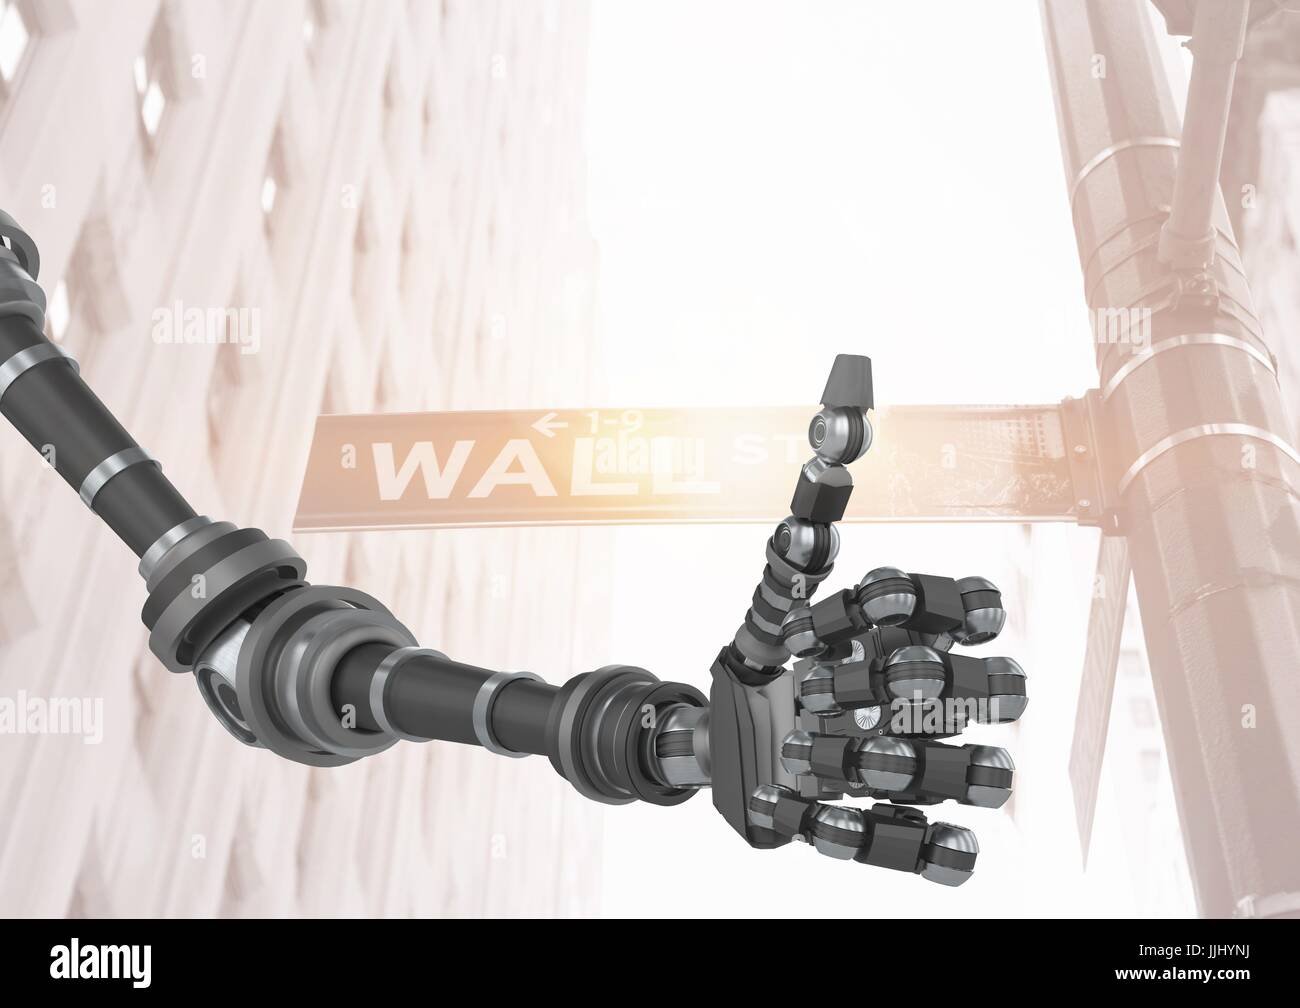 Thumbs Up Robot arm on wall street Stock Photo - Alamy